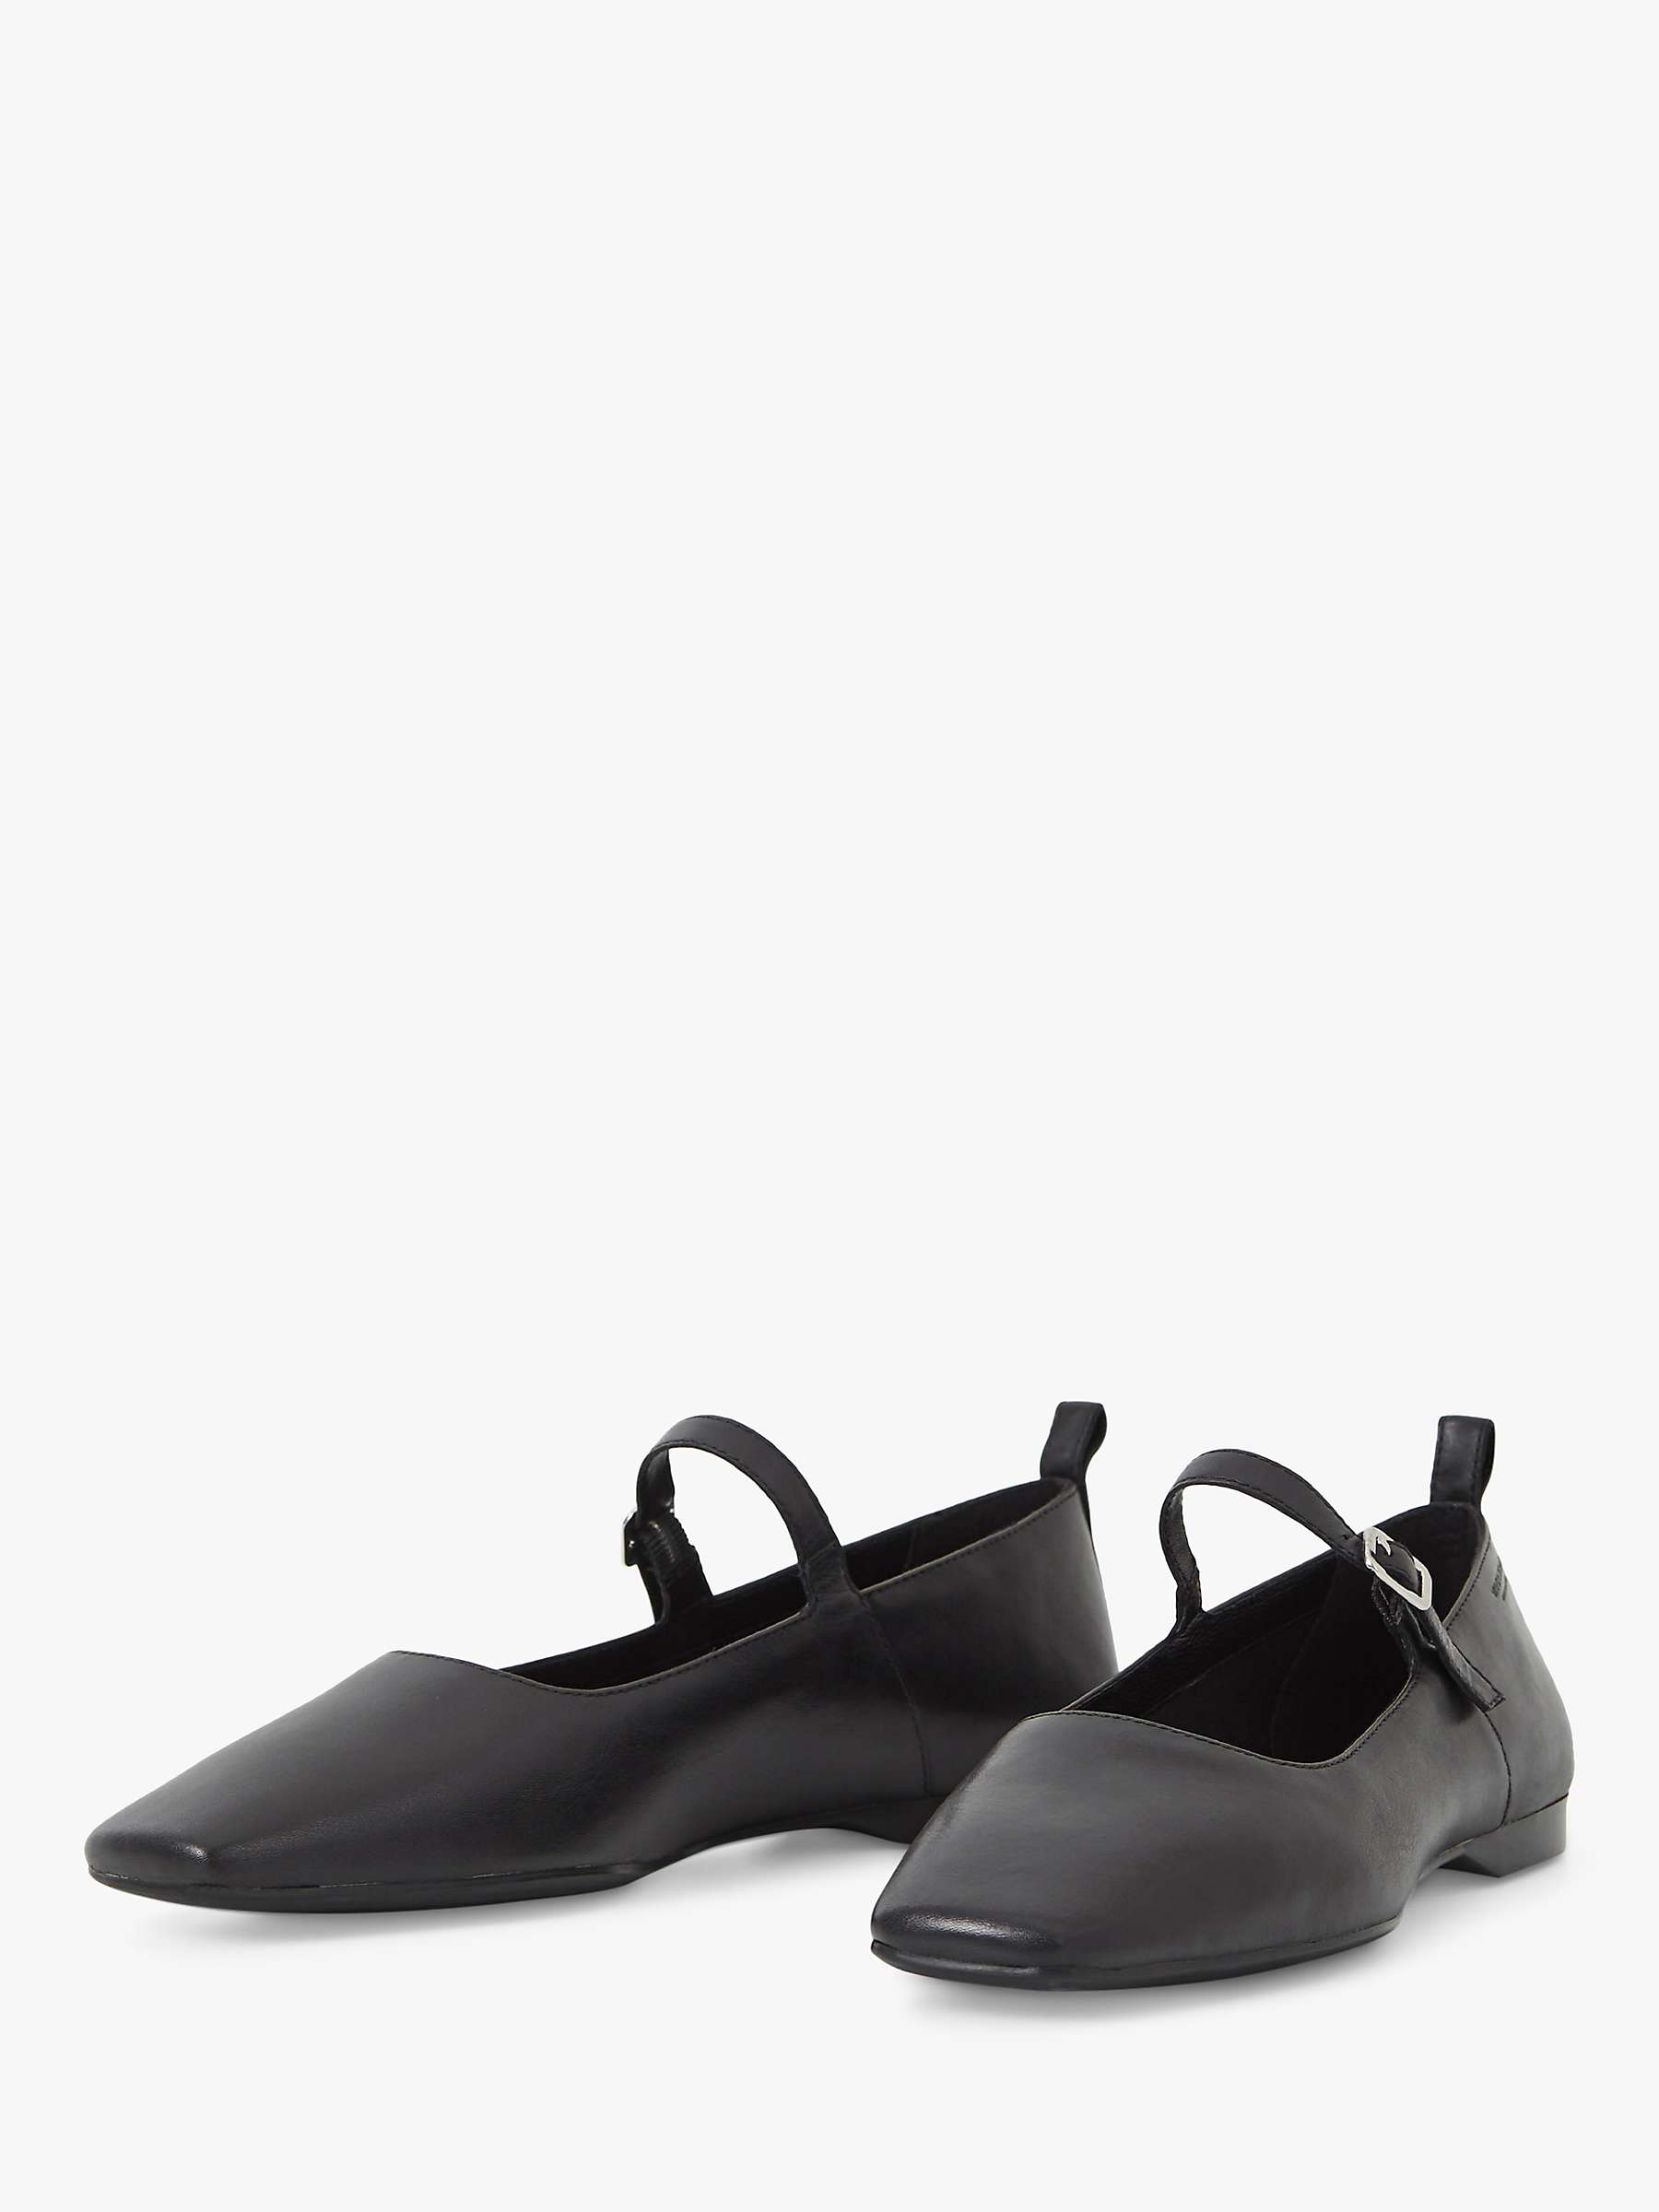 Buy Vagabond Shoemakers Delia Leather Flat Mary Jane Shoes, Black Online at johnlewis.com